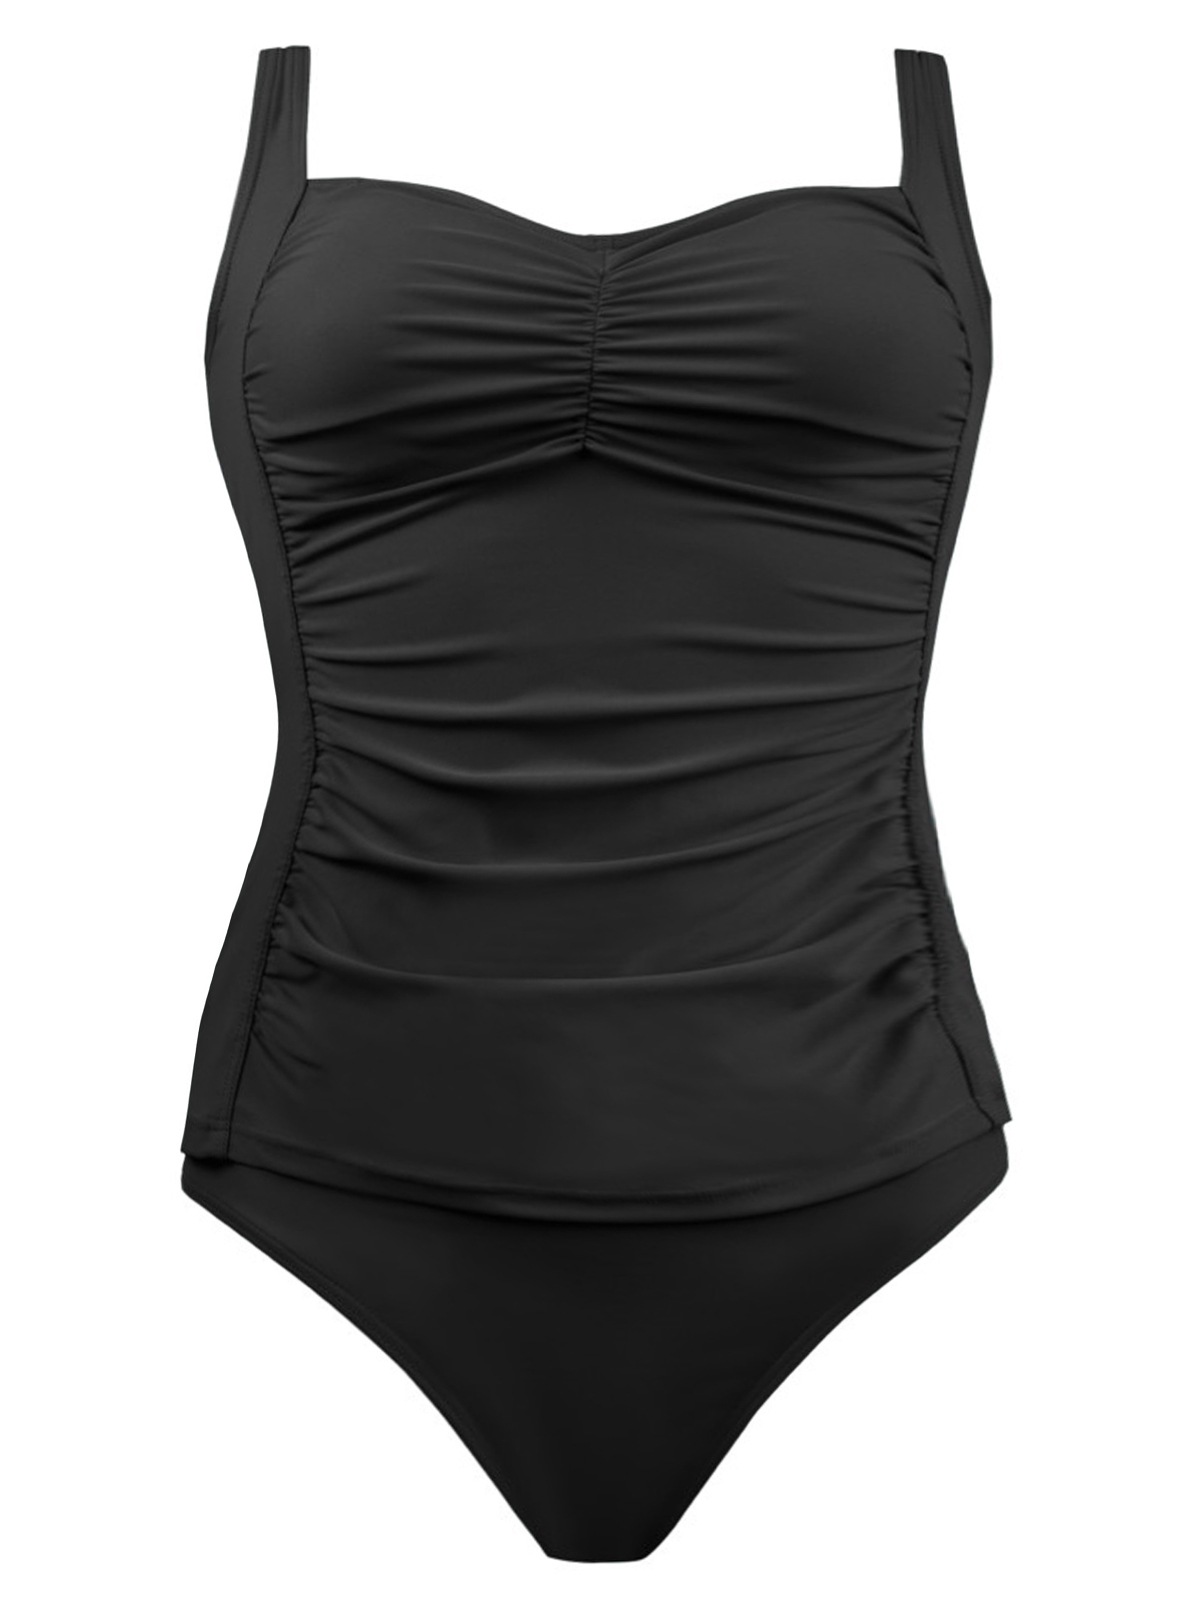 Naturana - - Naturana ASSORTED Plain & Printed Swimsuits - Size 10